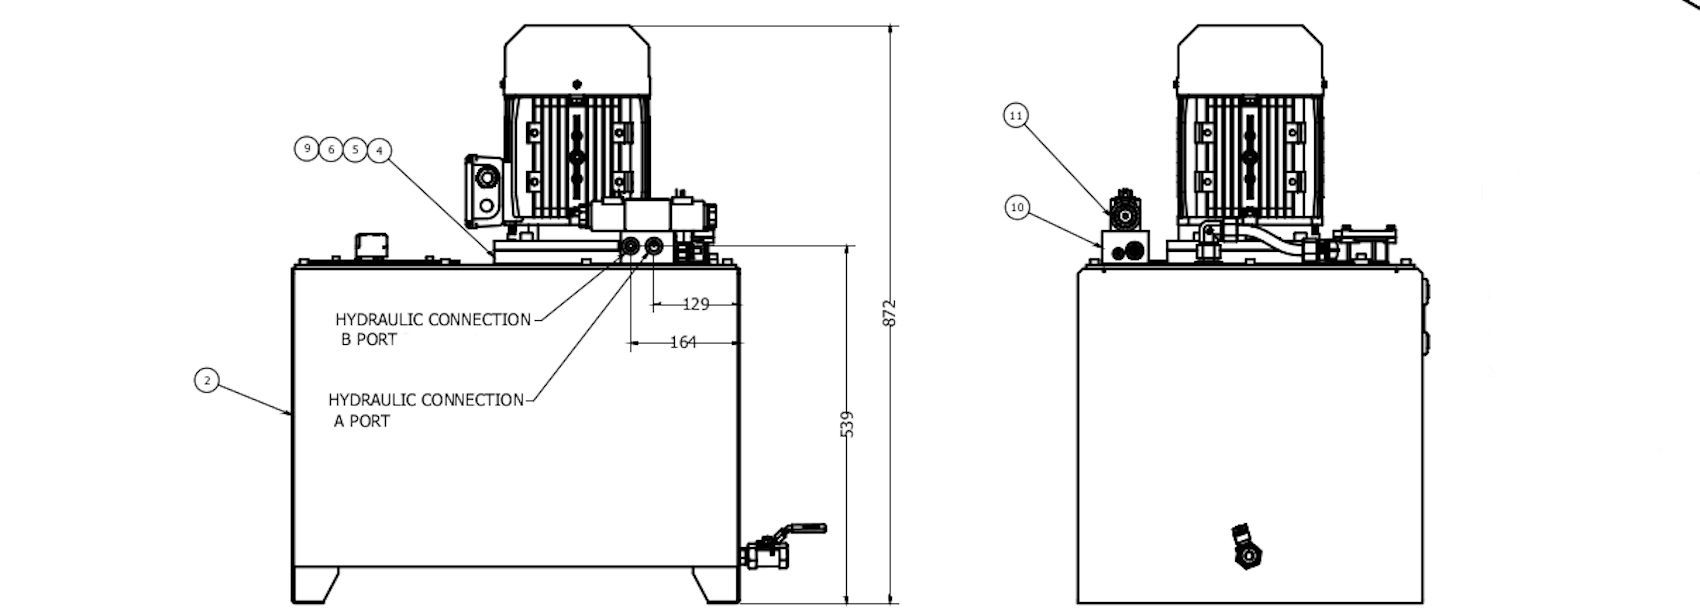 Understanding the Basics of Hydraulic Power Pack Design header image